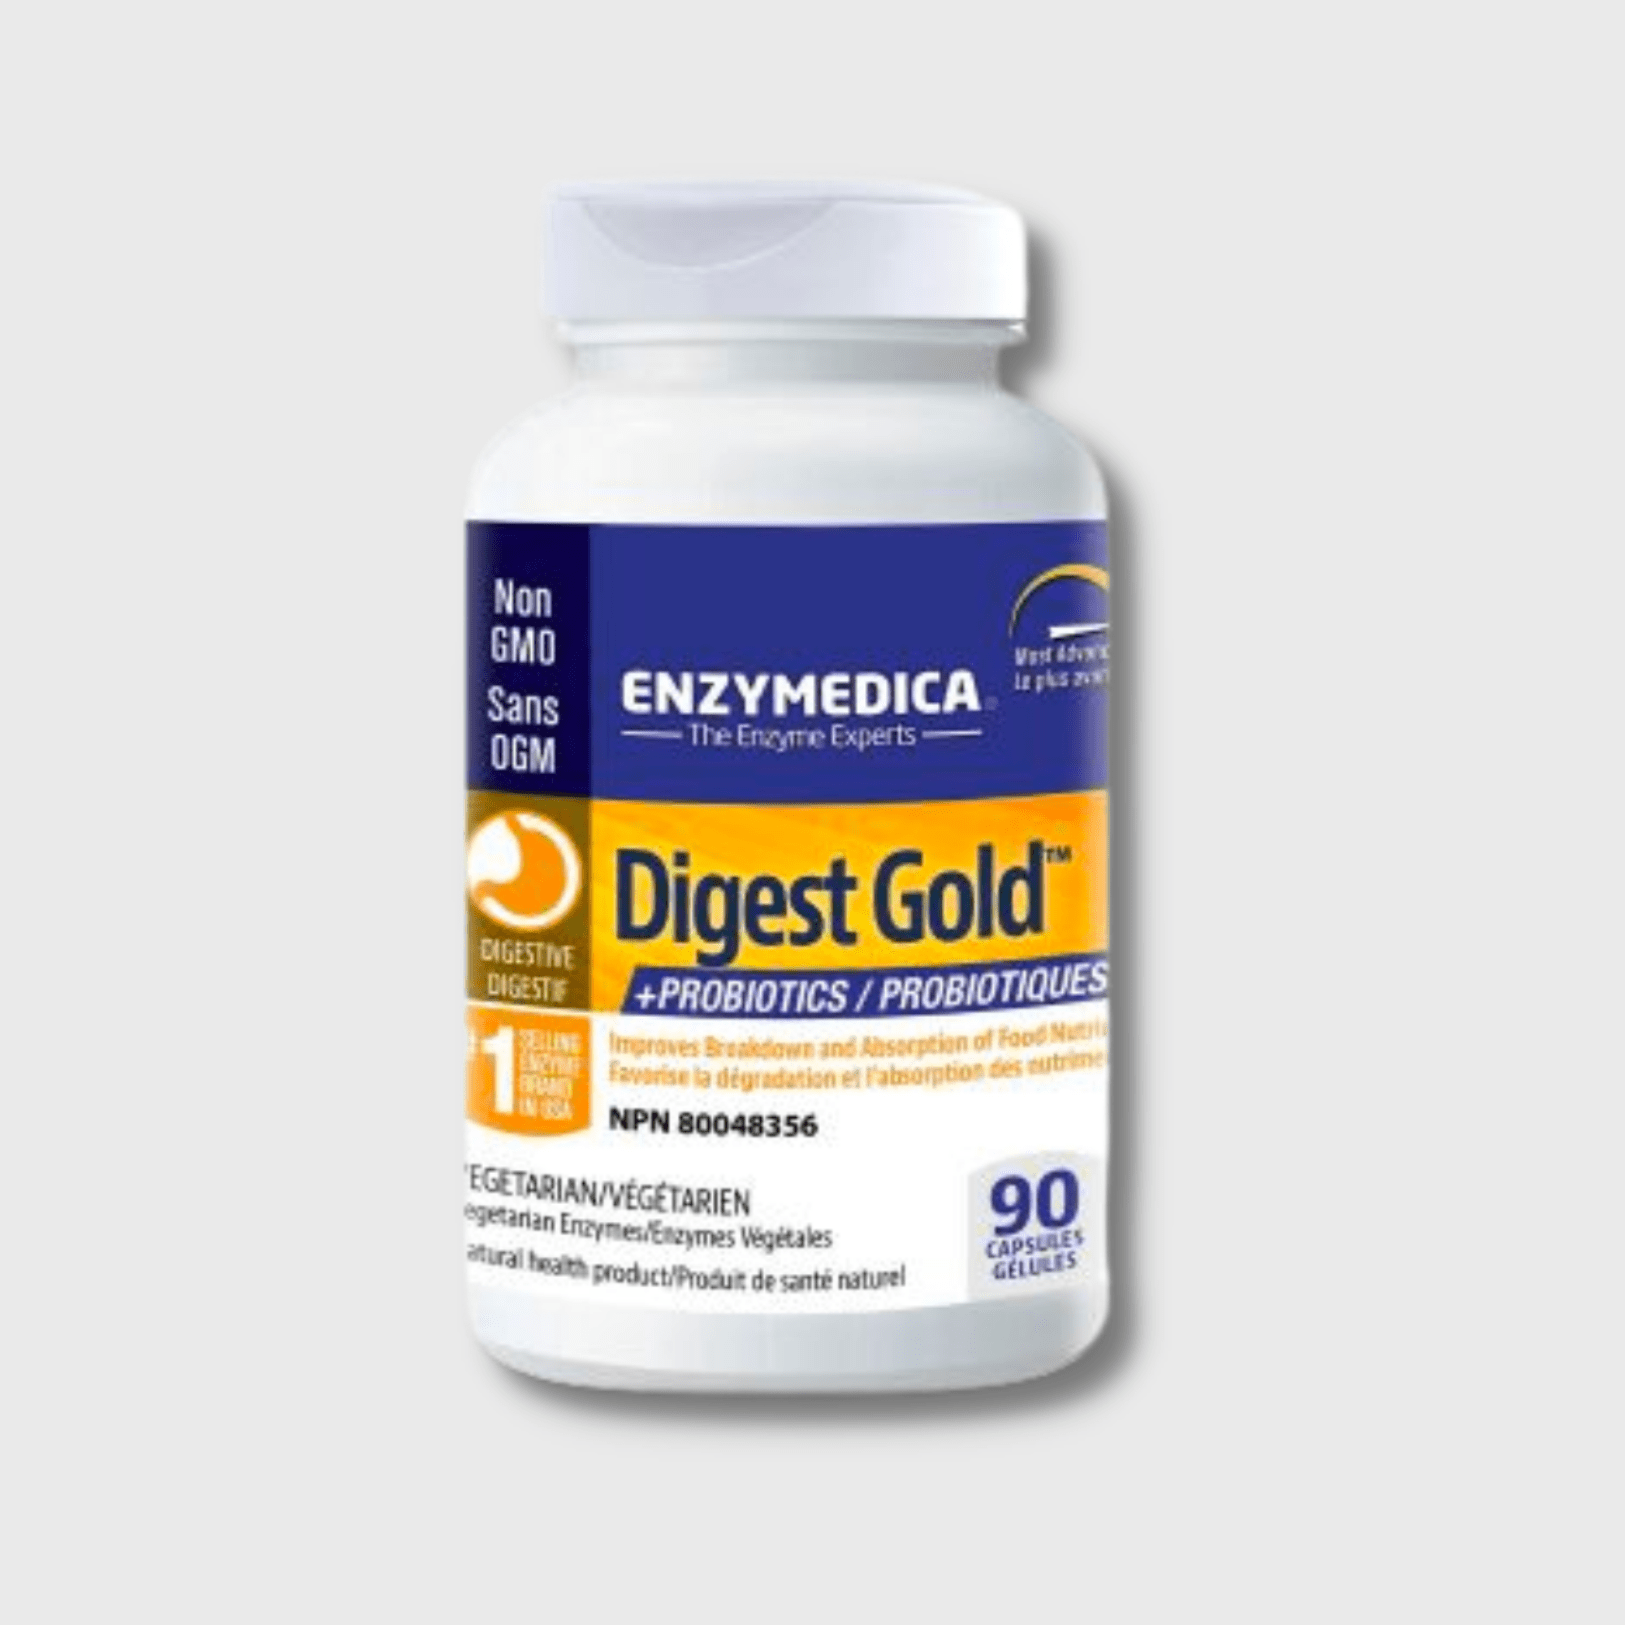 Digest Gold with ATPro